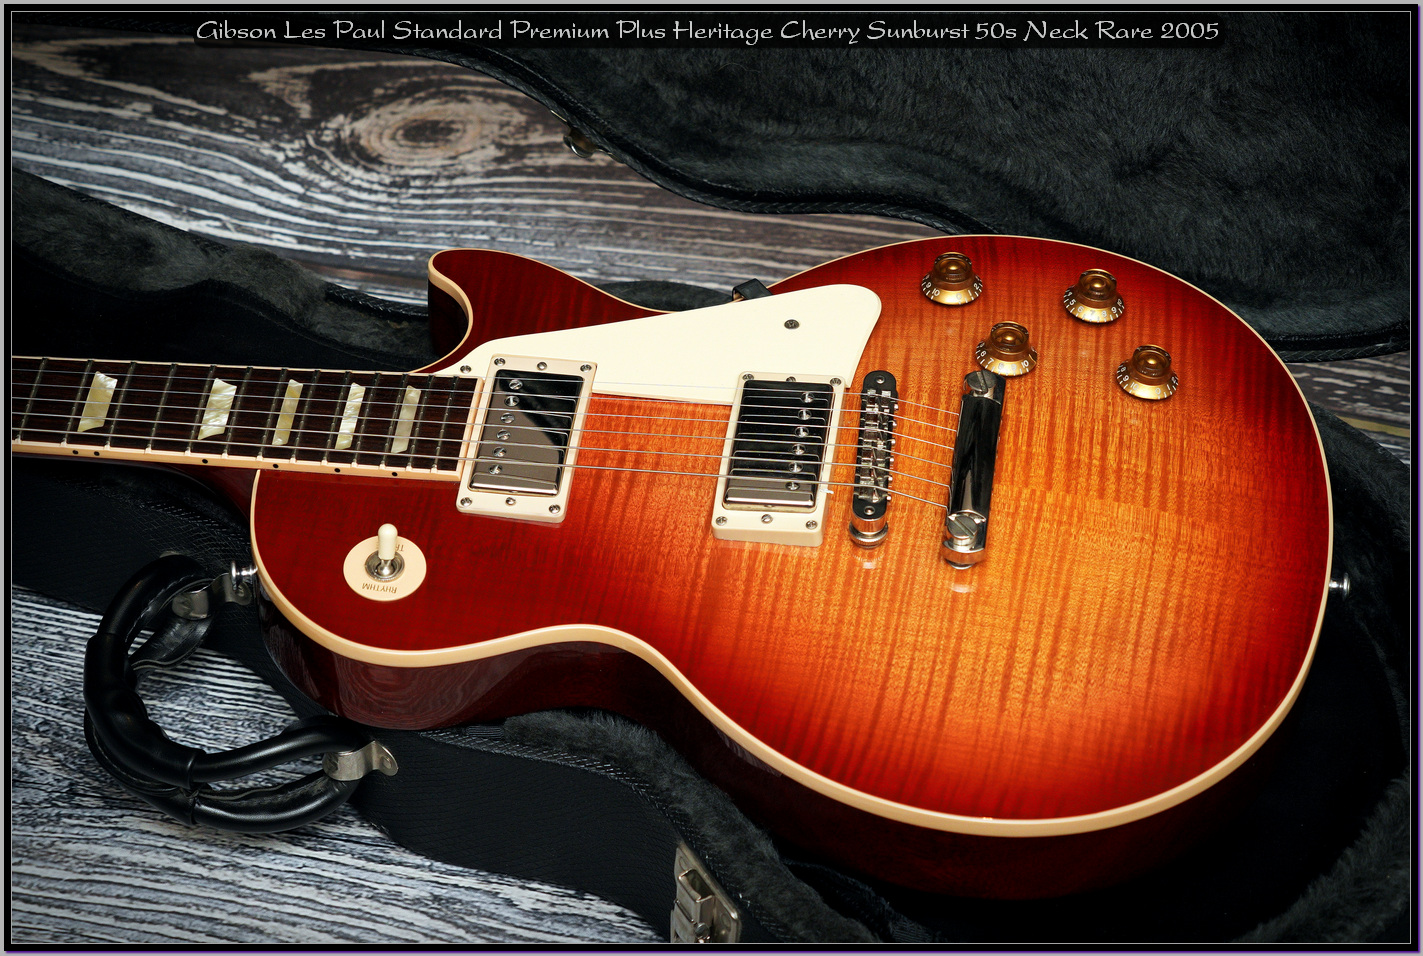 Gibson Les Paul Standard Premium Plus Heritage Cherry Sunburst 50s Neck Rare 2005 14a_x1440.jpg